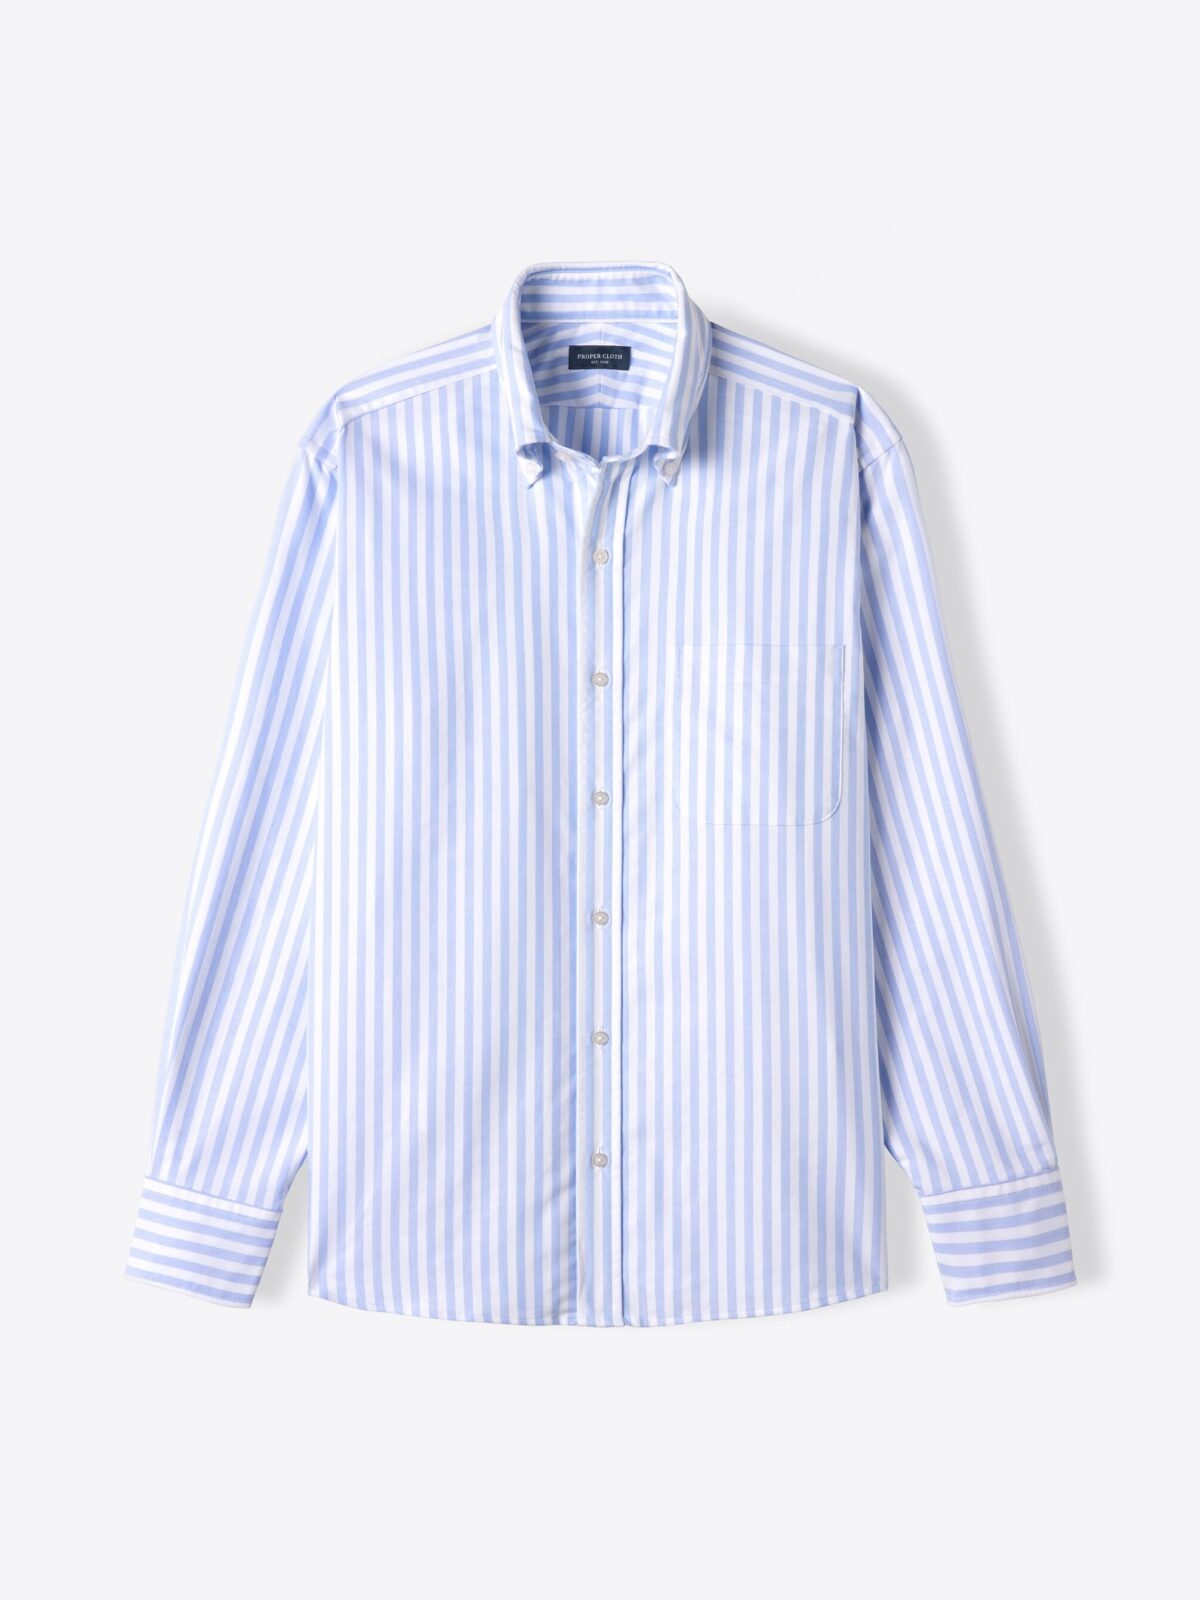 Thomas Mason Sky Wide Stripe Premium Oxford Cloth Shirt by Proper